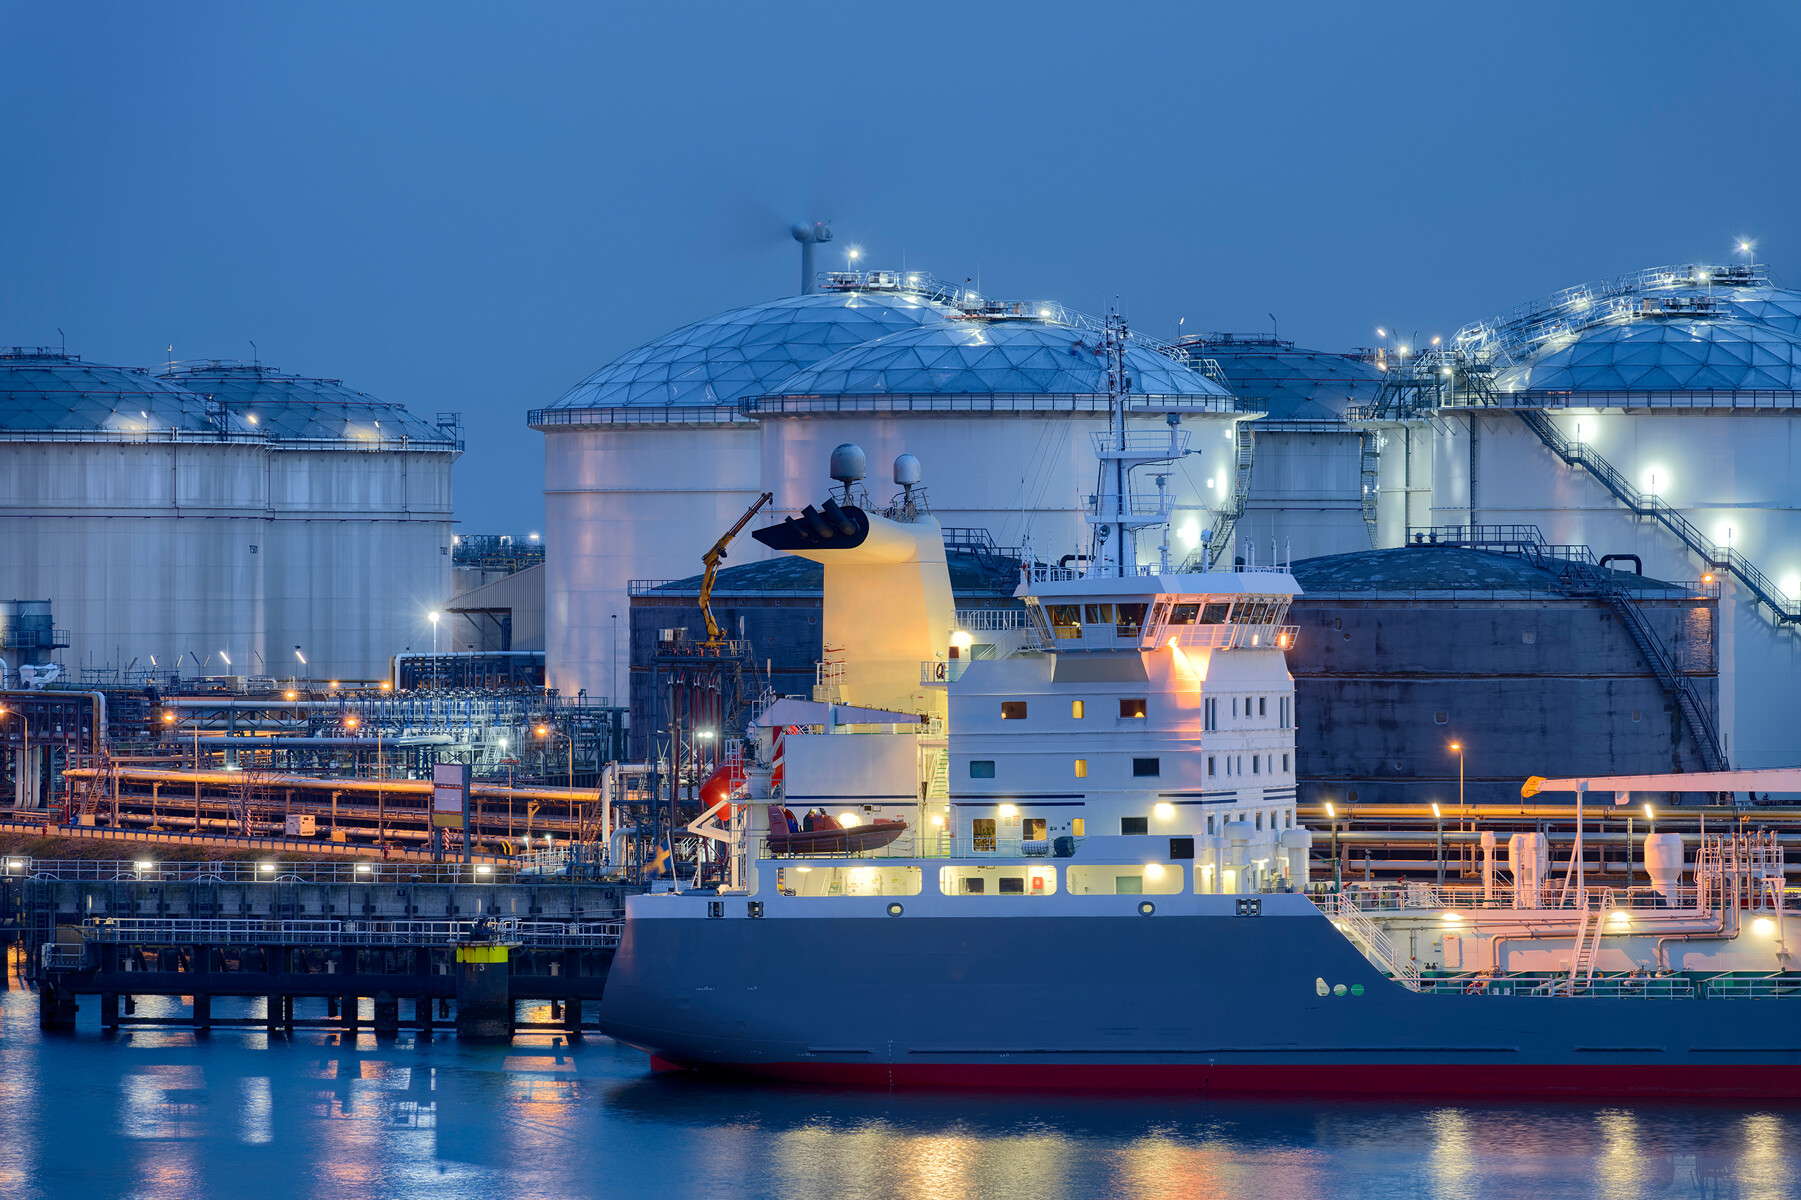 Oil tanker in a port